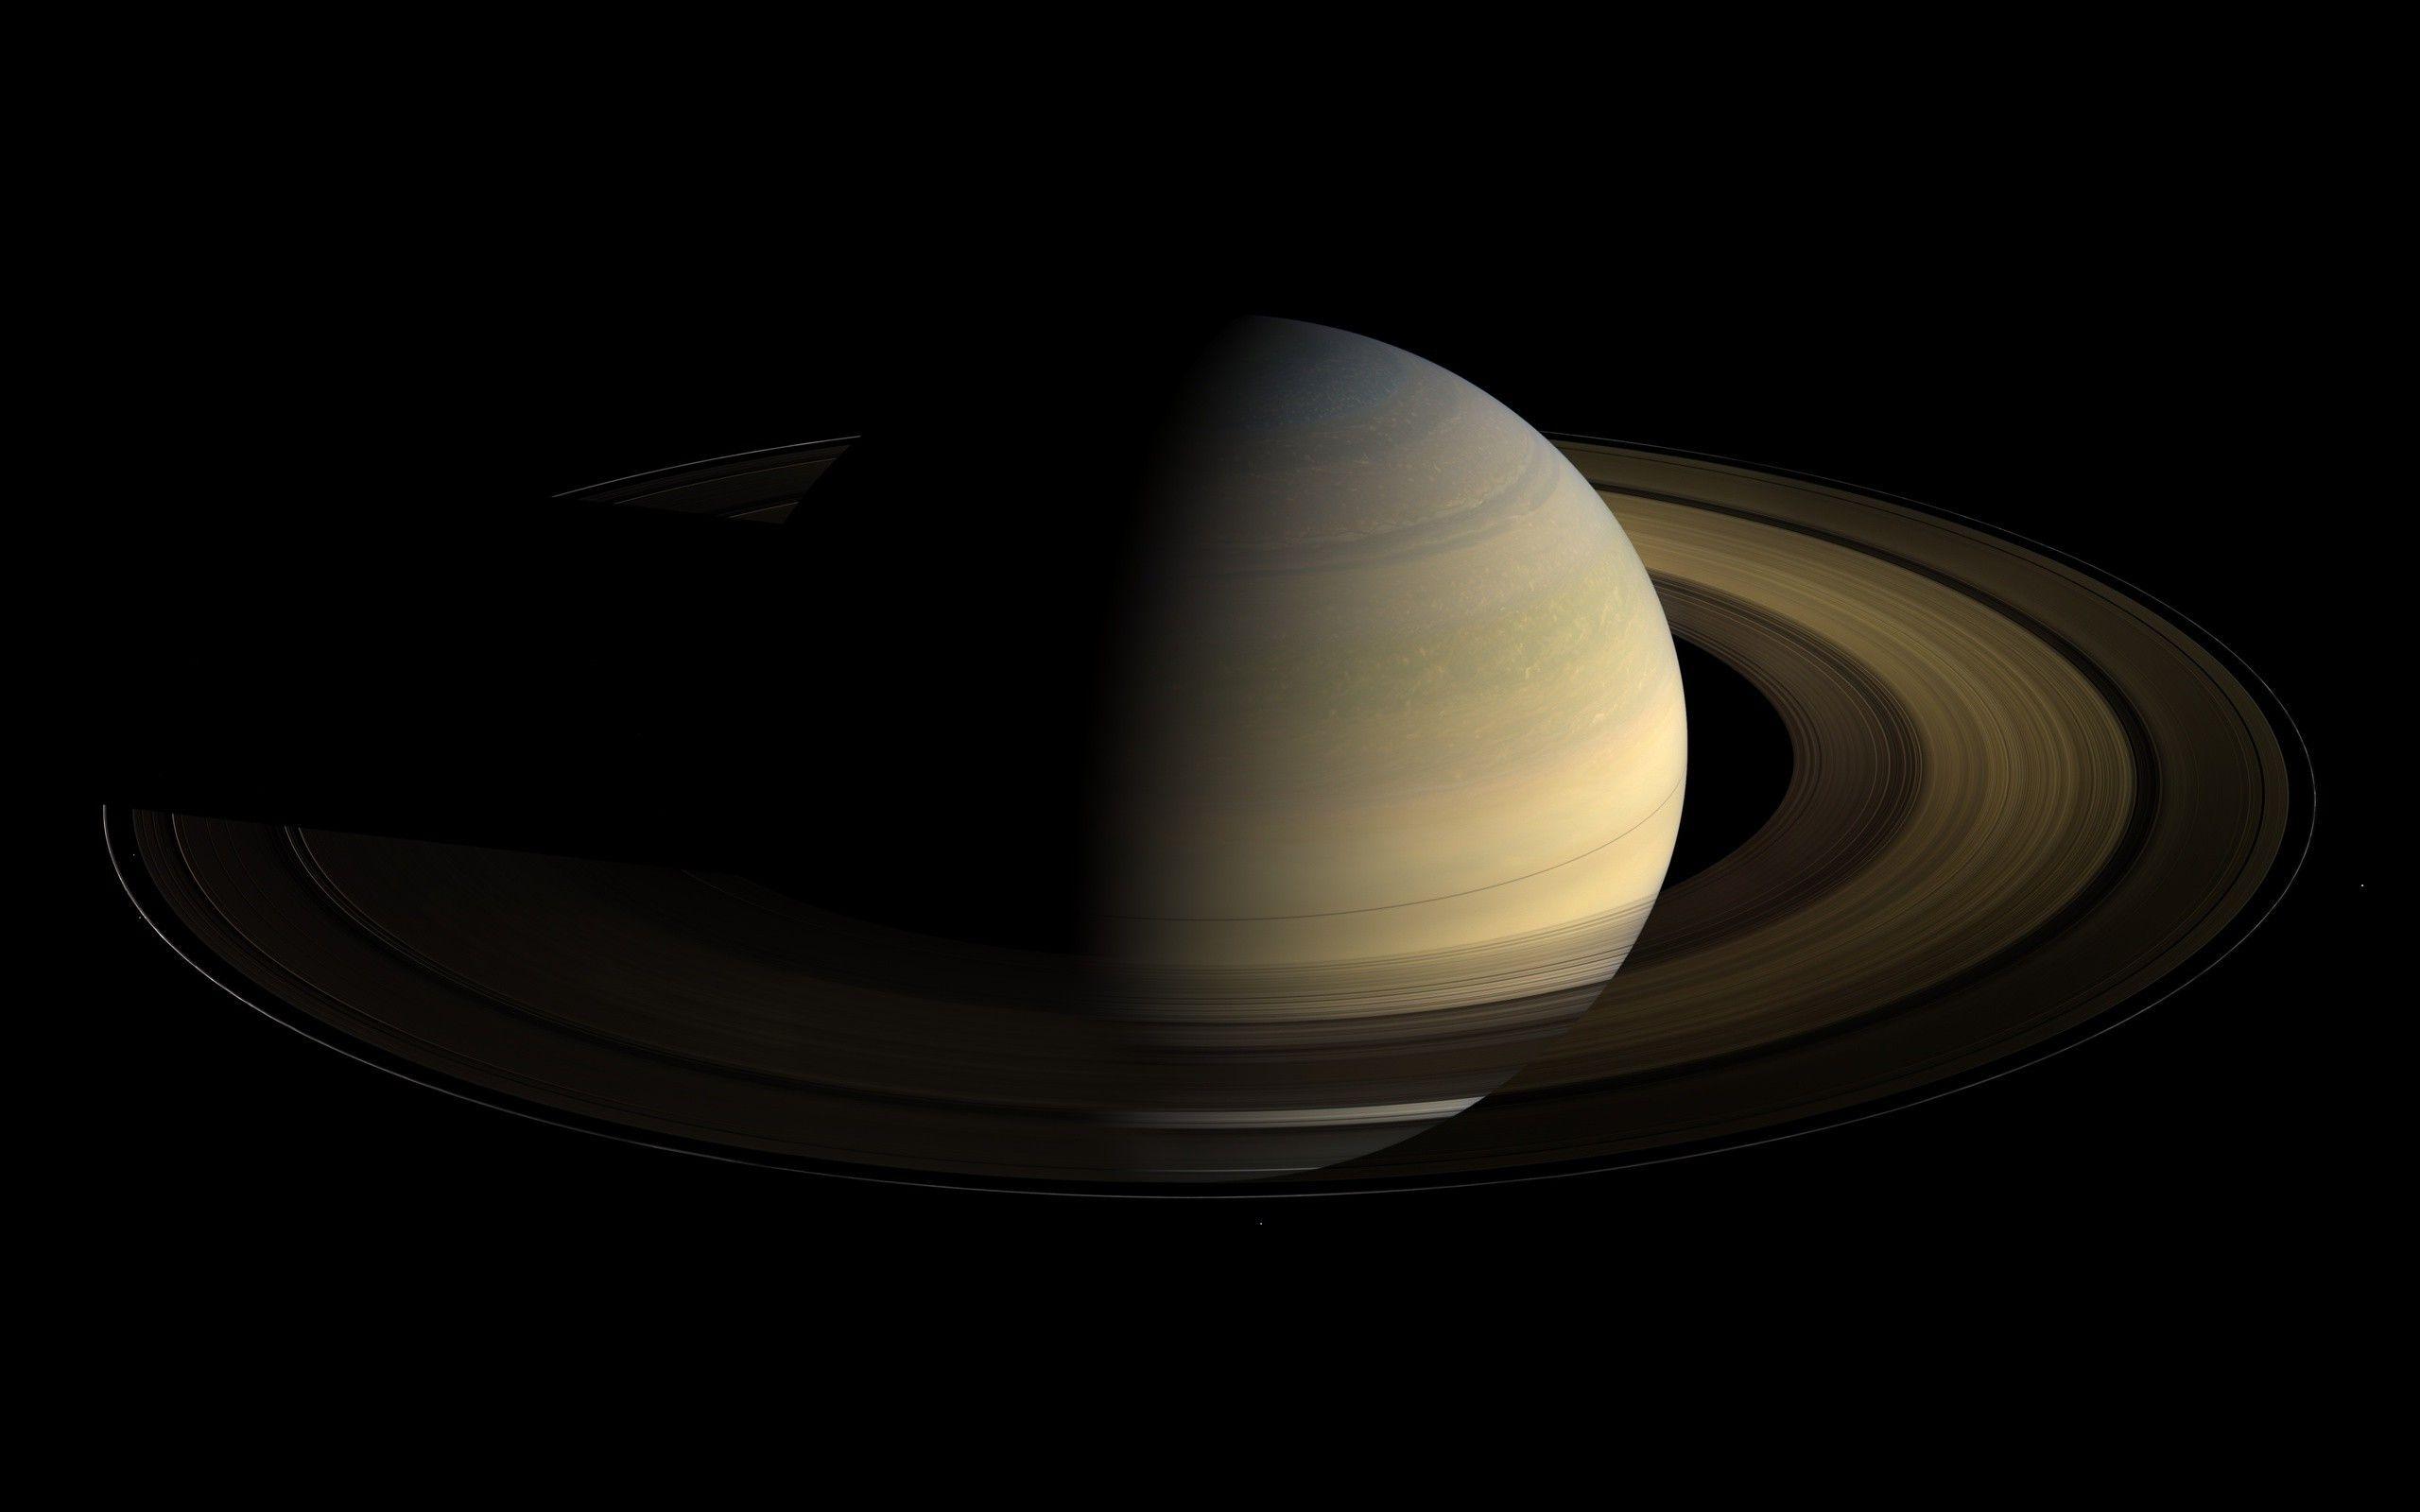 Saturn Wallpaper Background 62298 2560x1600 px